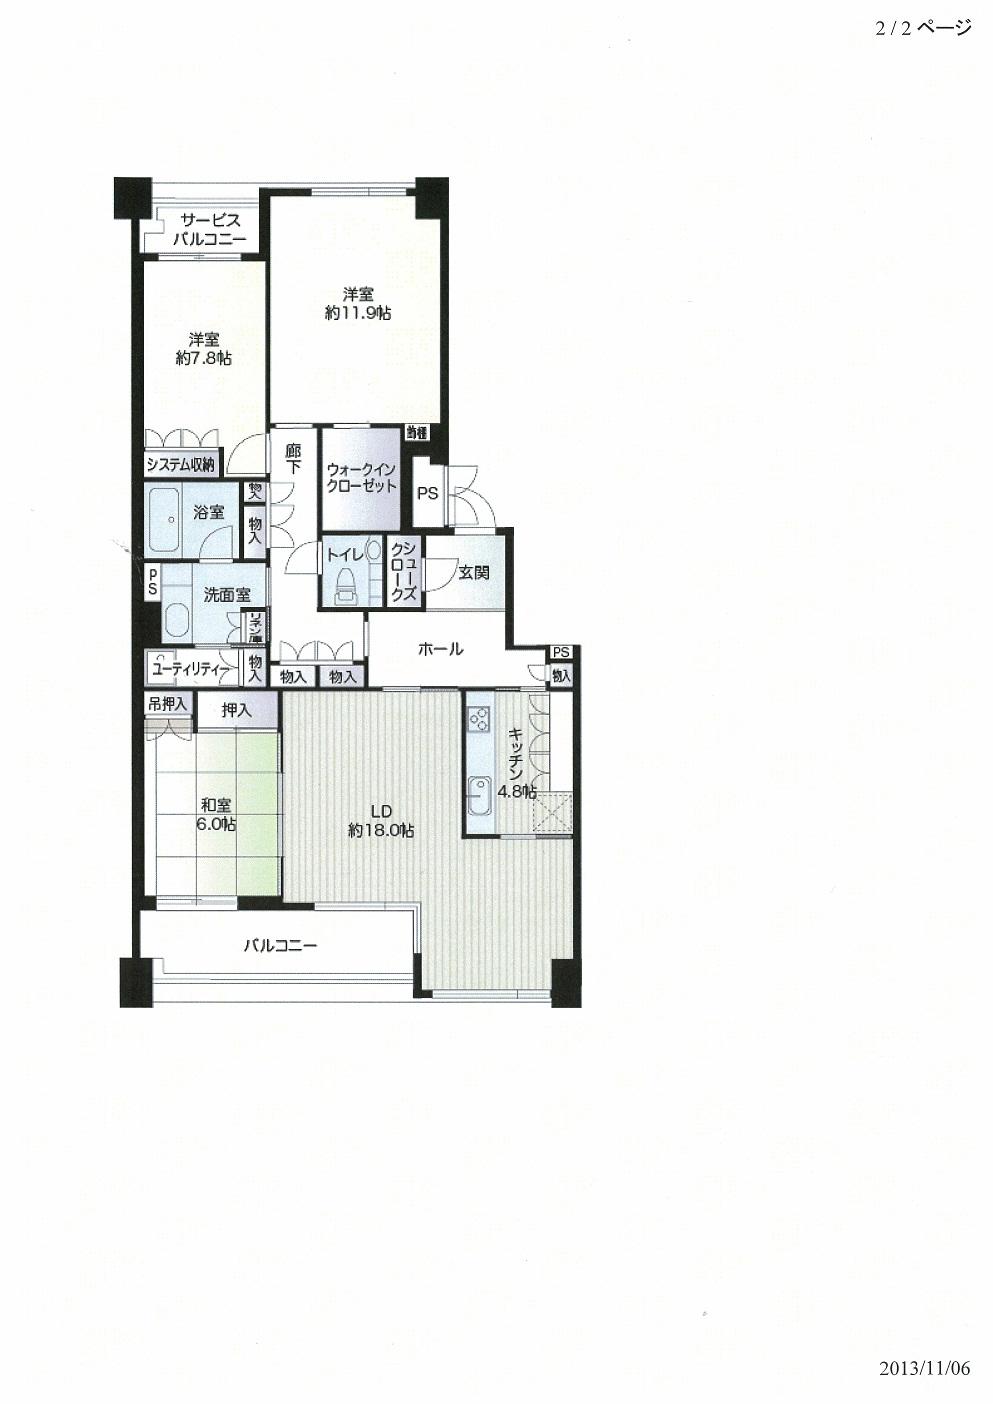 Floor plan. 3LDK, Price 128 million yen, Footprint 125.93 sq m , Balcony area 11.37 sq m